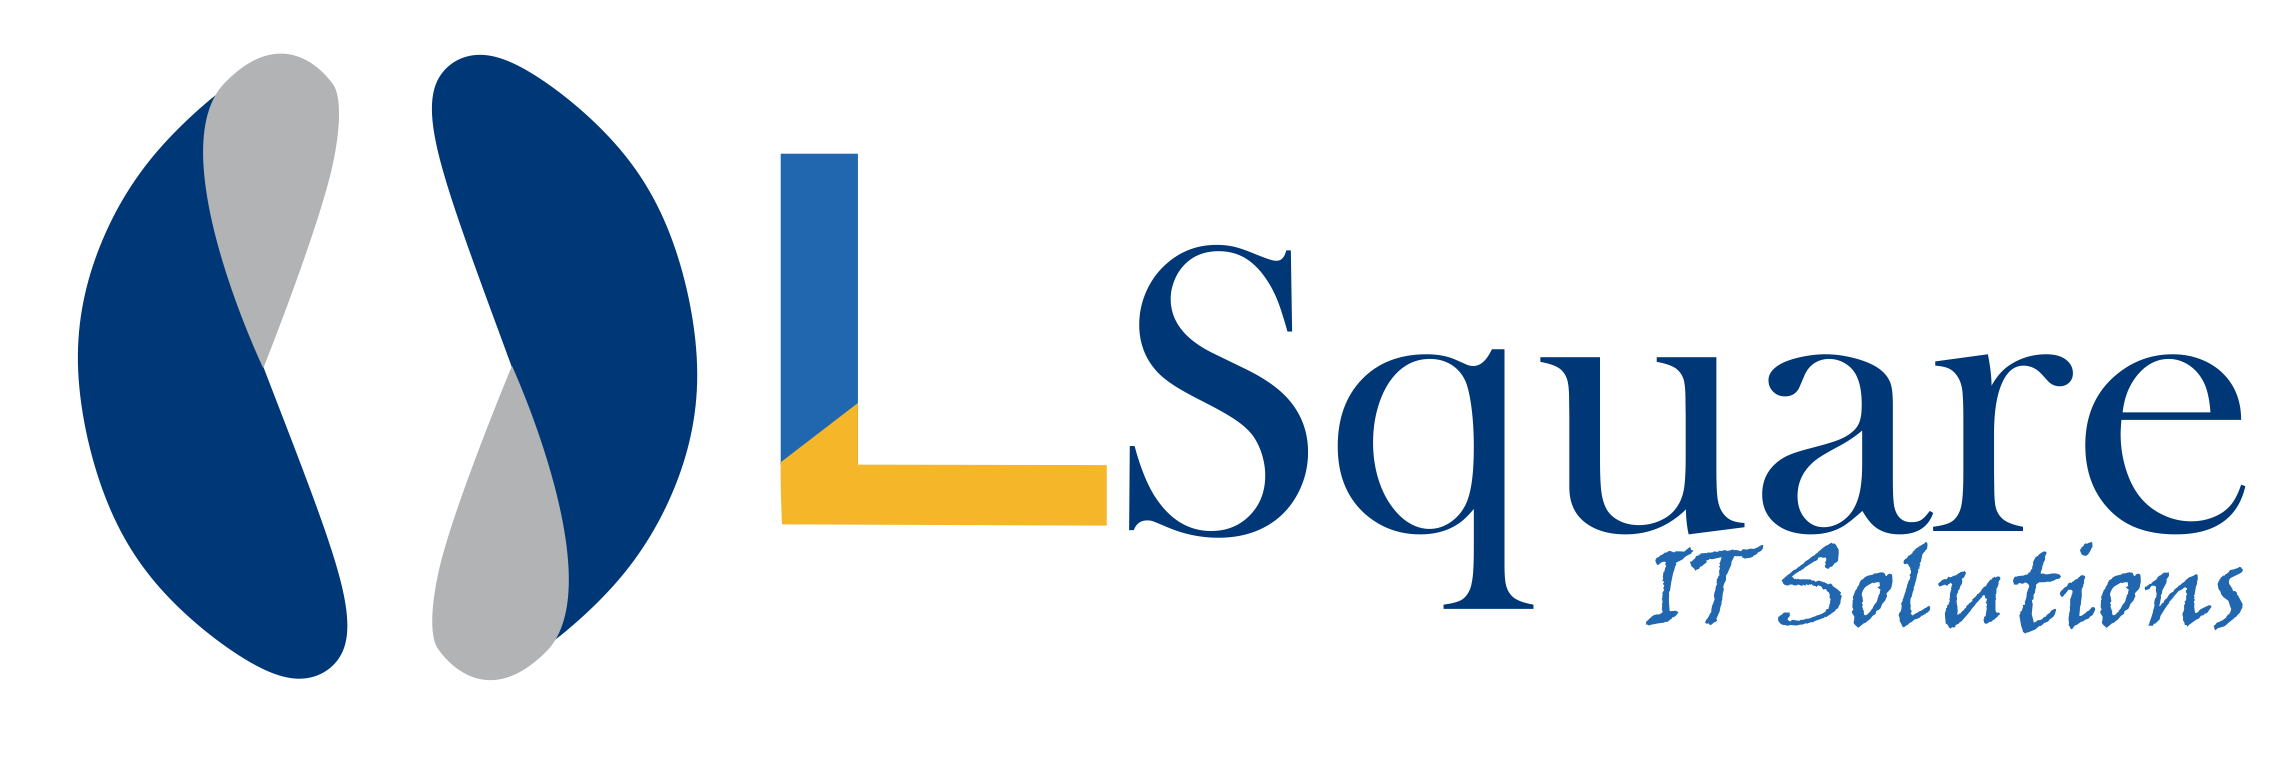 Lsquare IT Solutions logo